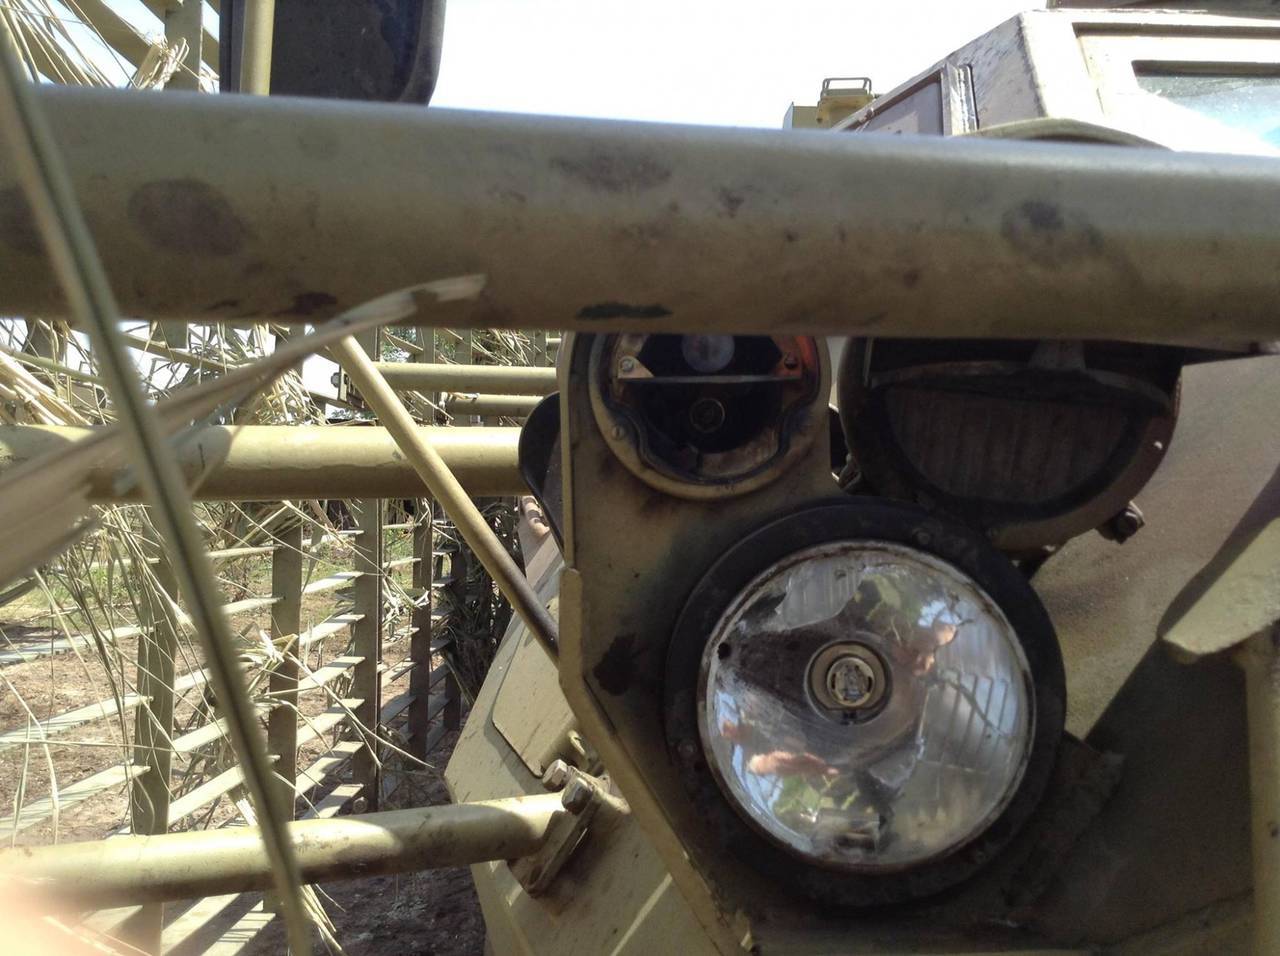 Damages Ukrainian armored vehicles